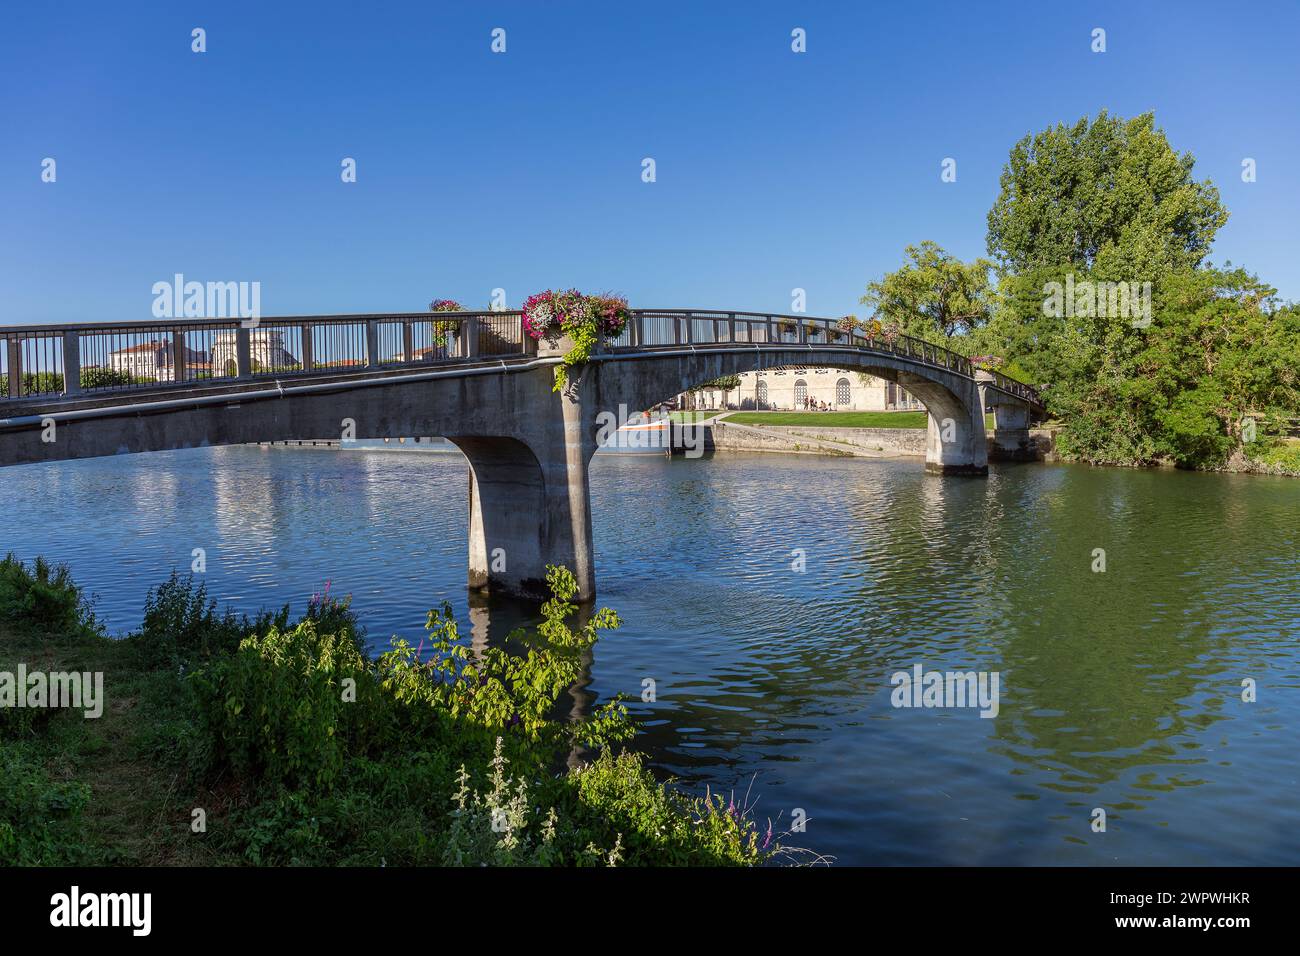 Europa, Francia, Nouvelle-Aquitaine, Saintes, Passerelle Piéton de Saintes (ponte pedonale) sul fiume Charente dalla riva sinistra Foto Stock